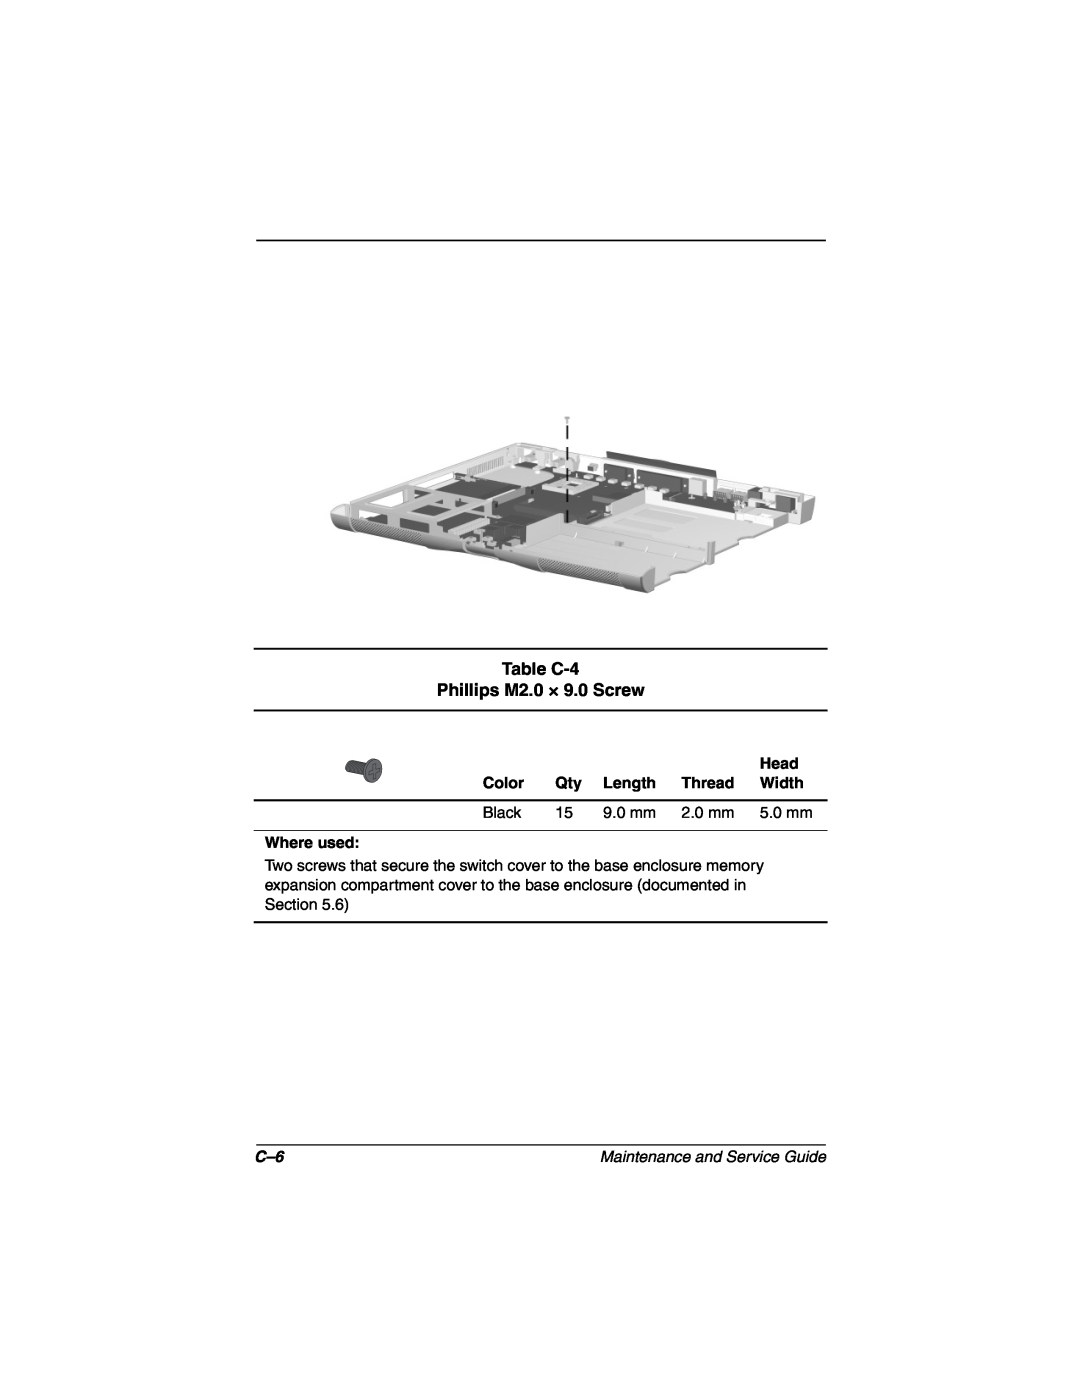 Compaq N160 manual Table C-4 Phillips M2.0 × 9.0 Screw 